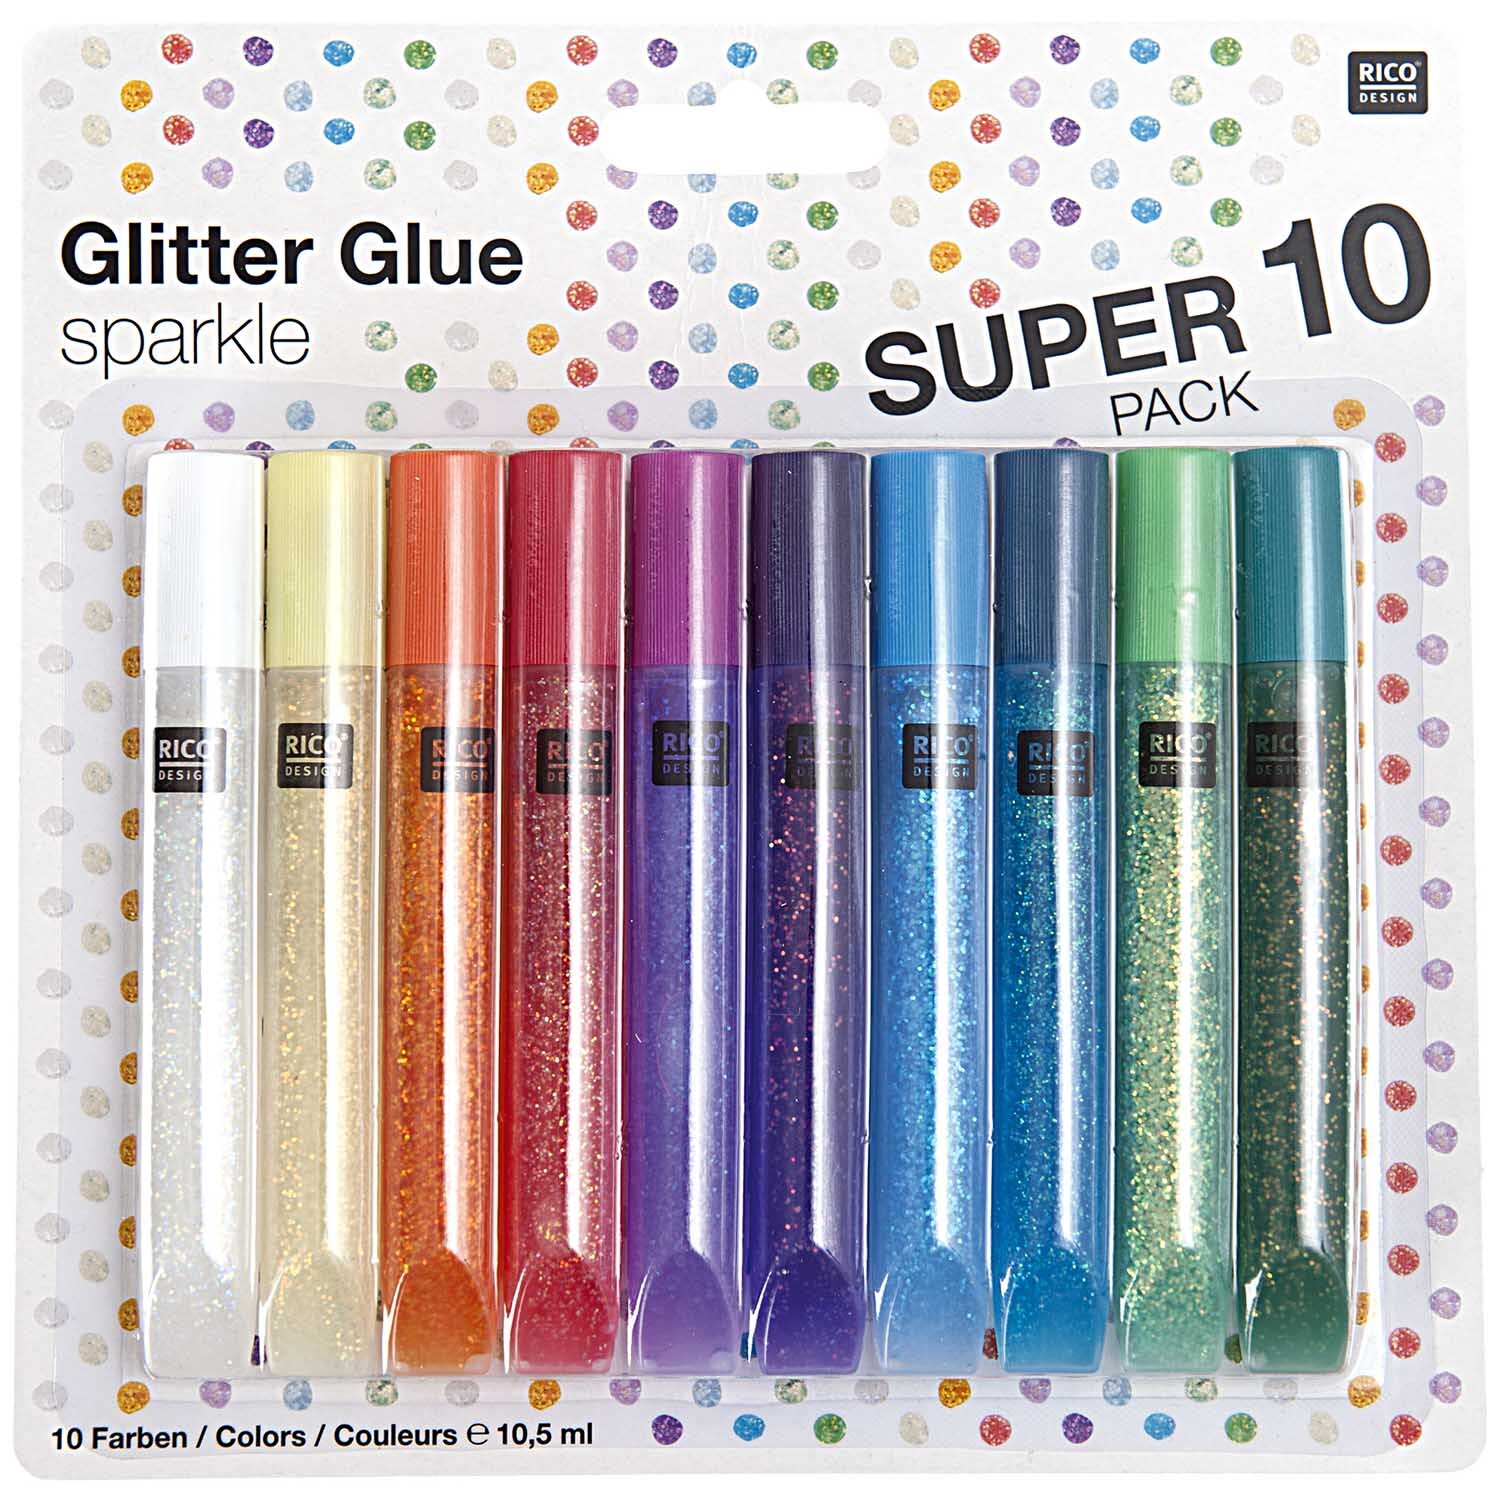 Glitter Glue sparkle 10x10,5ml